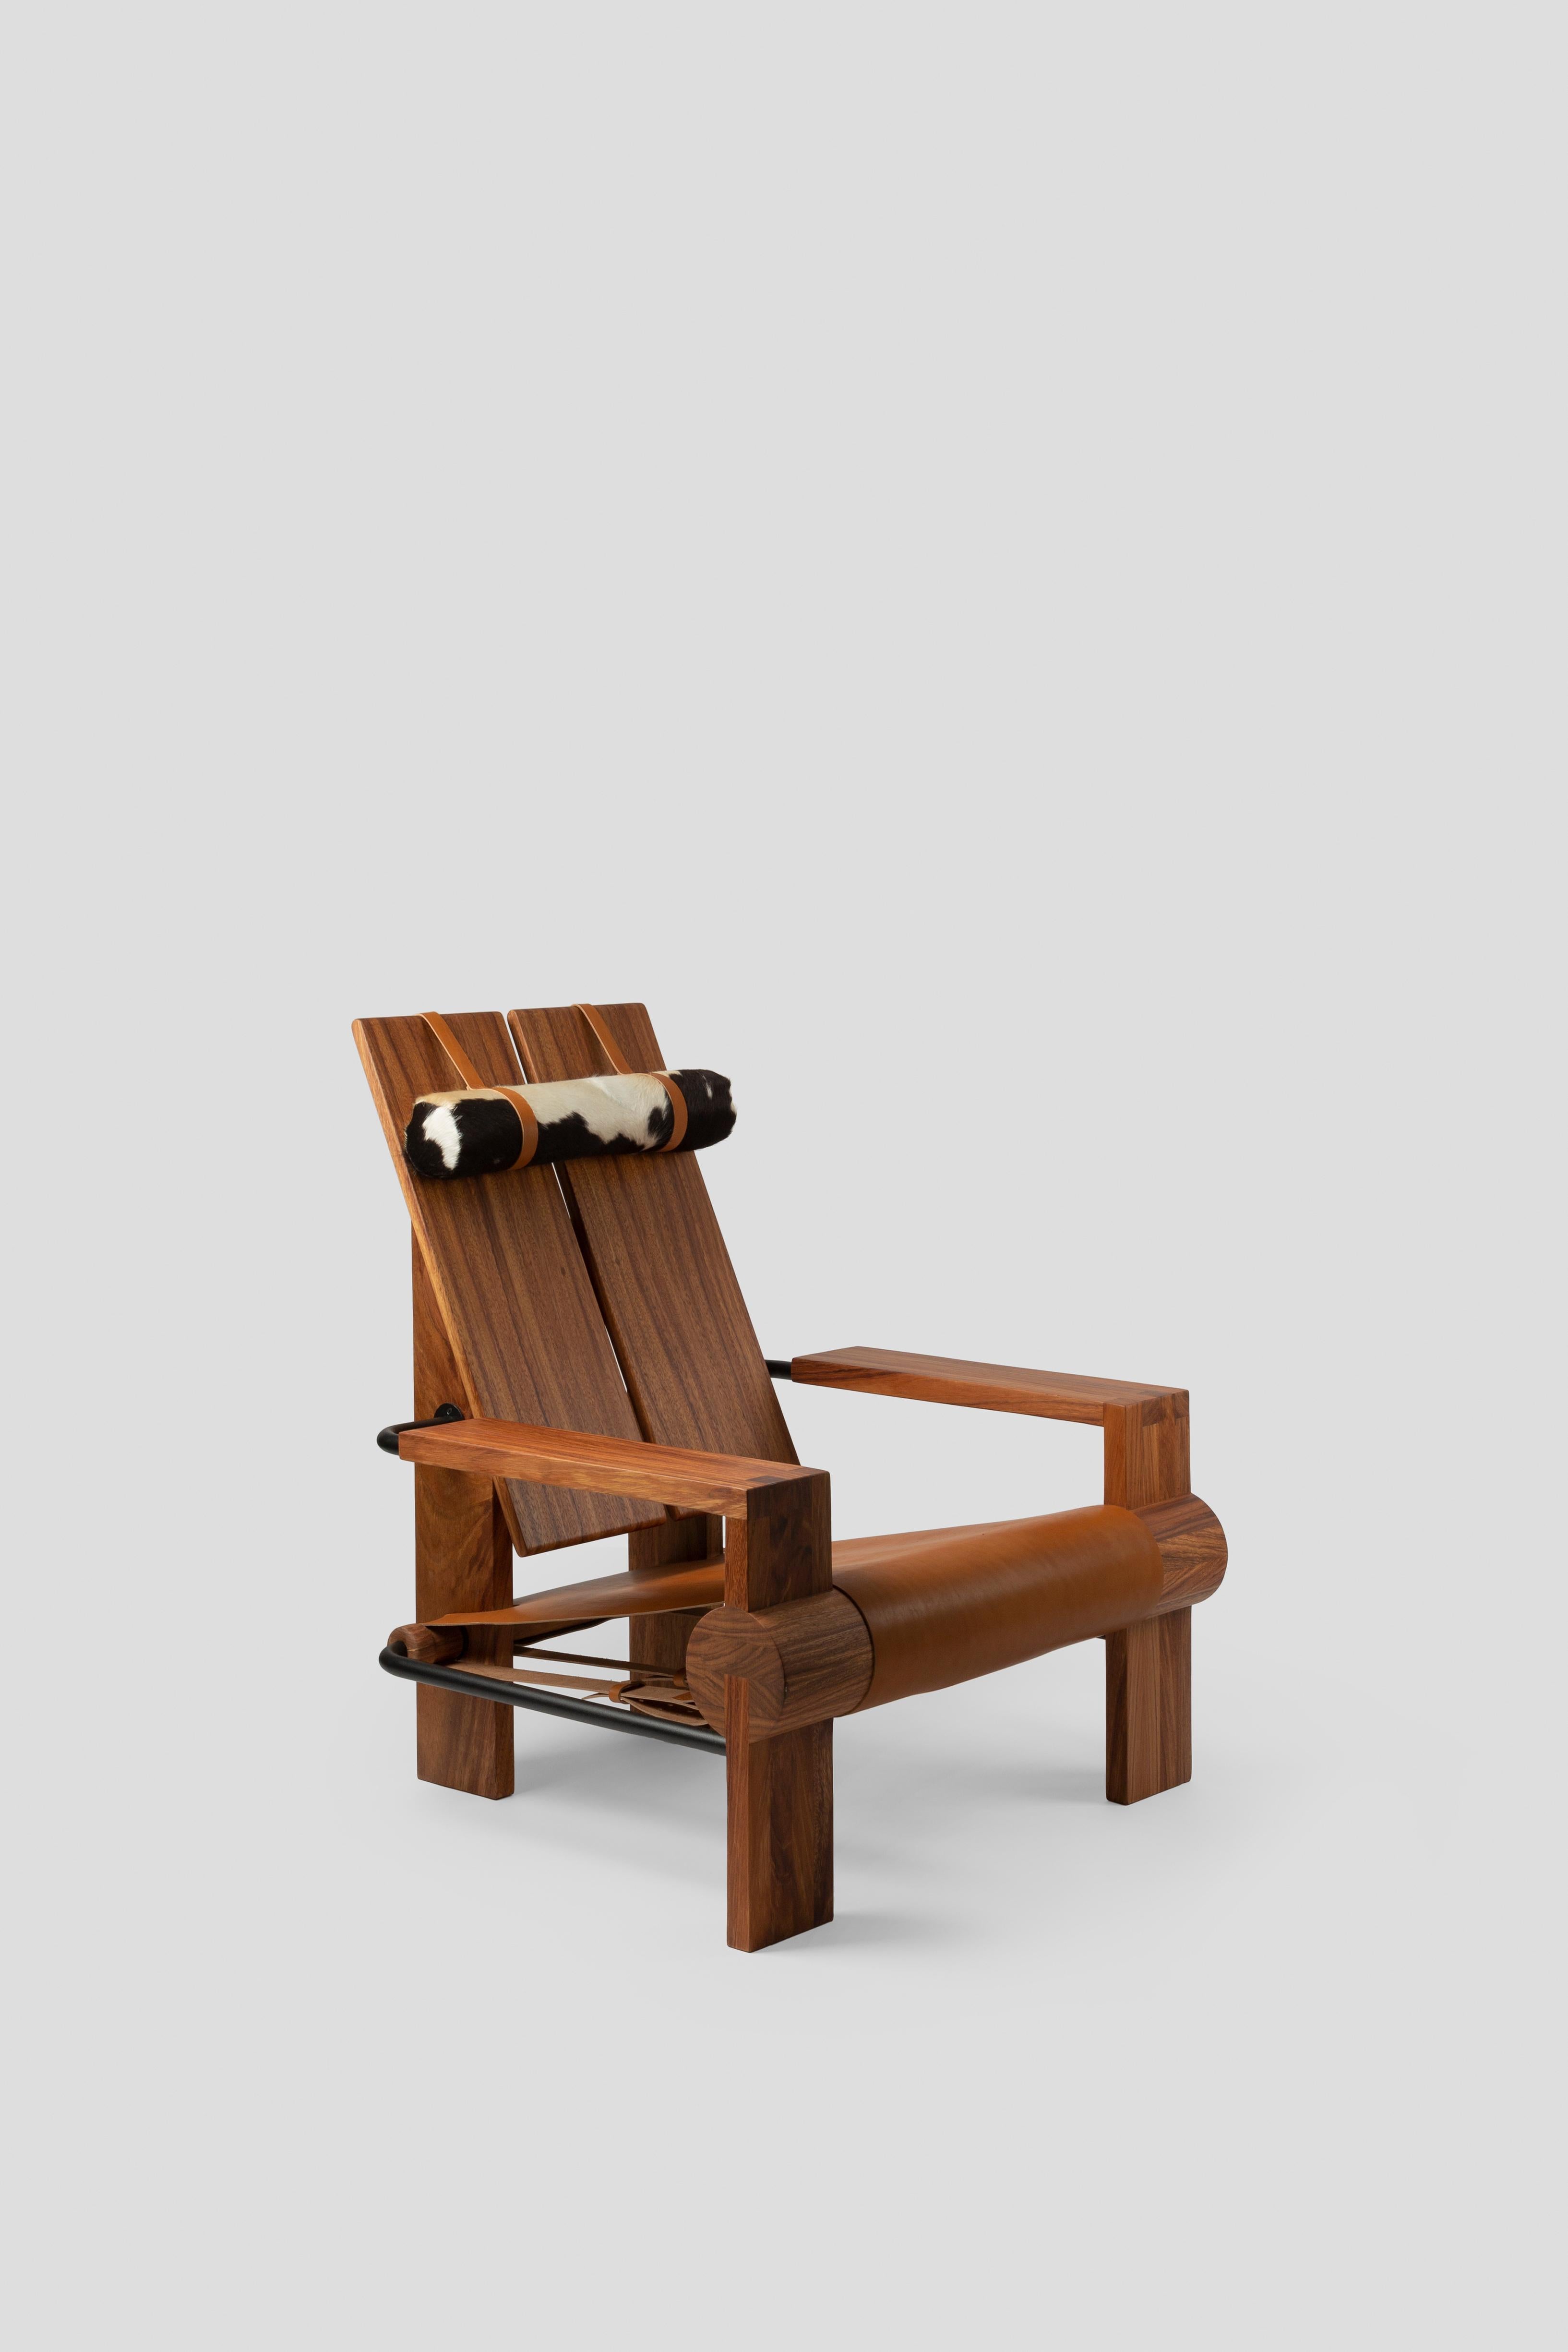 San Francisco Chair by Comité De Proyectos
Dimensions: D 83 x W 89 x H 97 cm.
Materials: Huanacaxtle solid wood, electrostatic black painted metal, cowhide and fur.

Manufactured in solid wood, electrostatic black painted metal. Cowhide seat